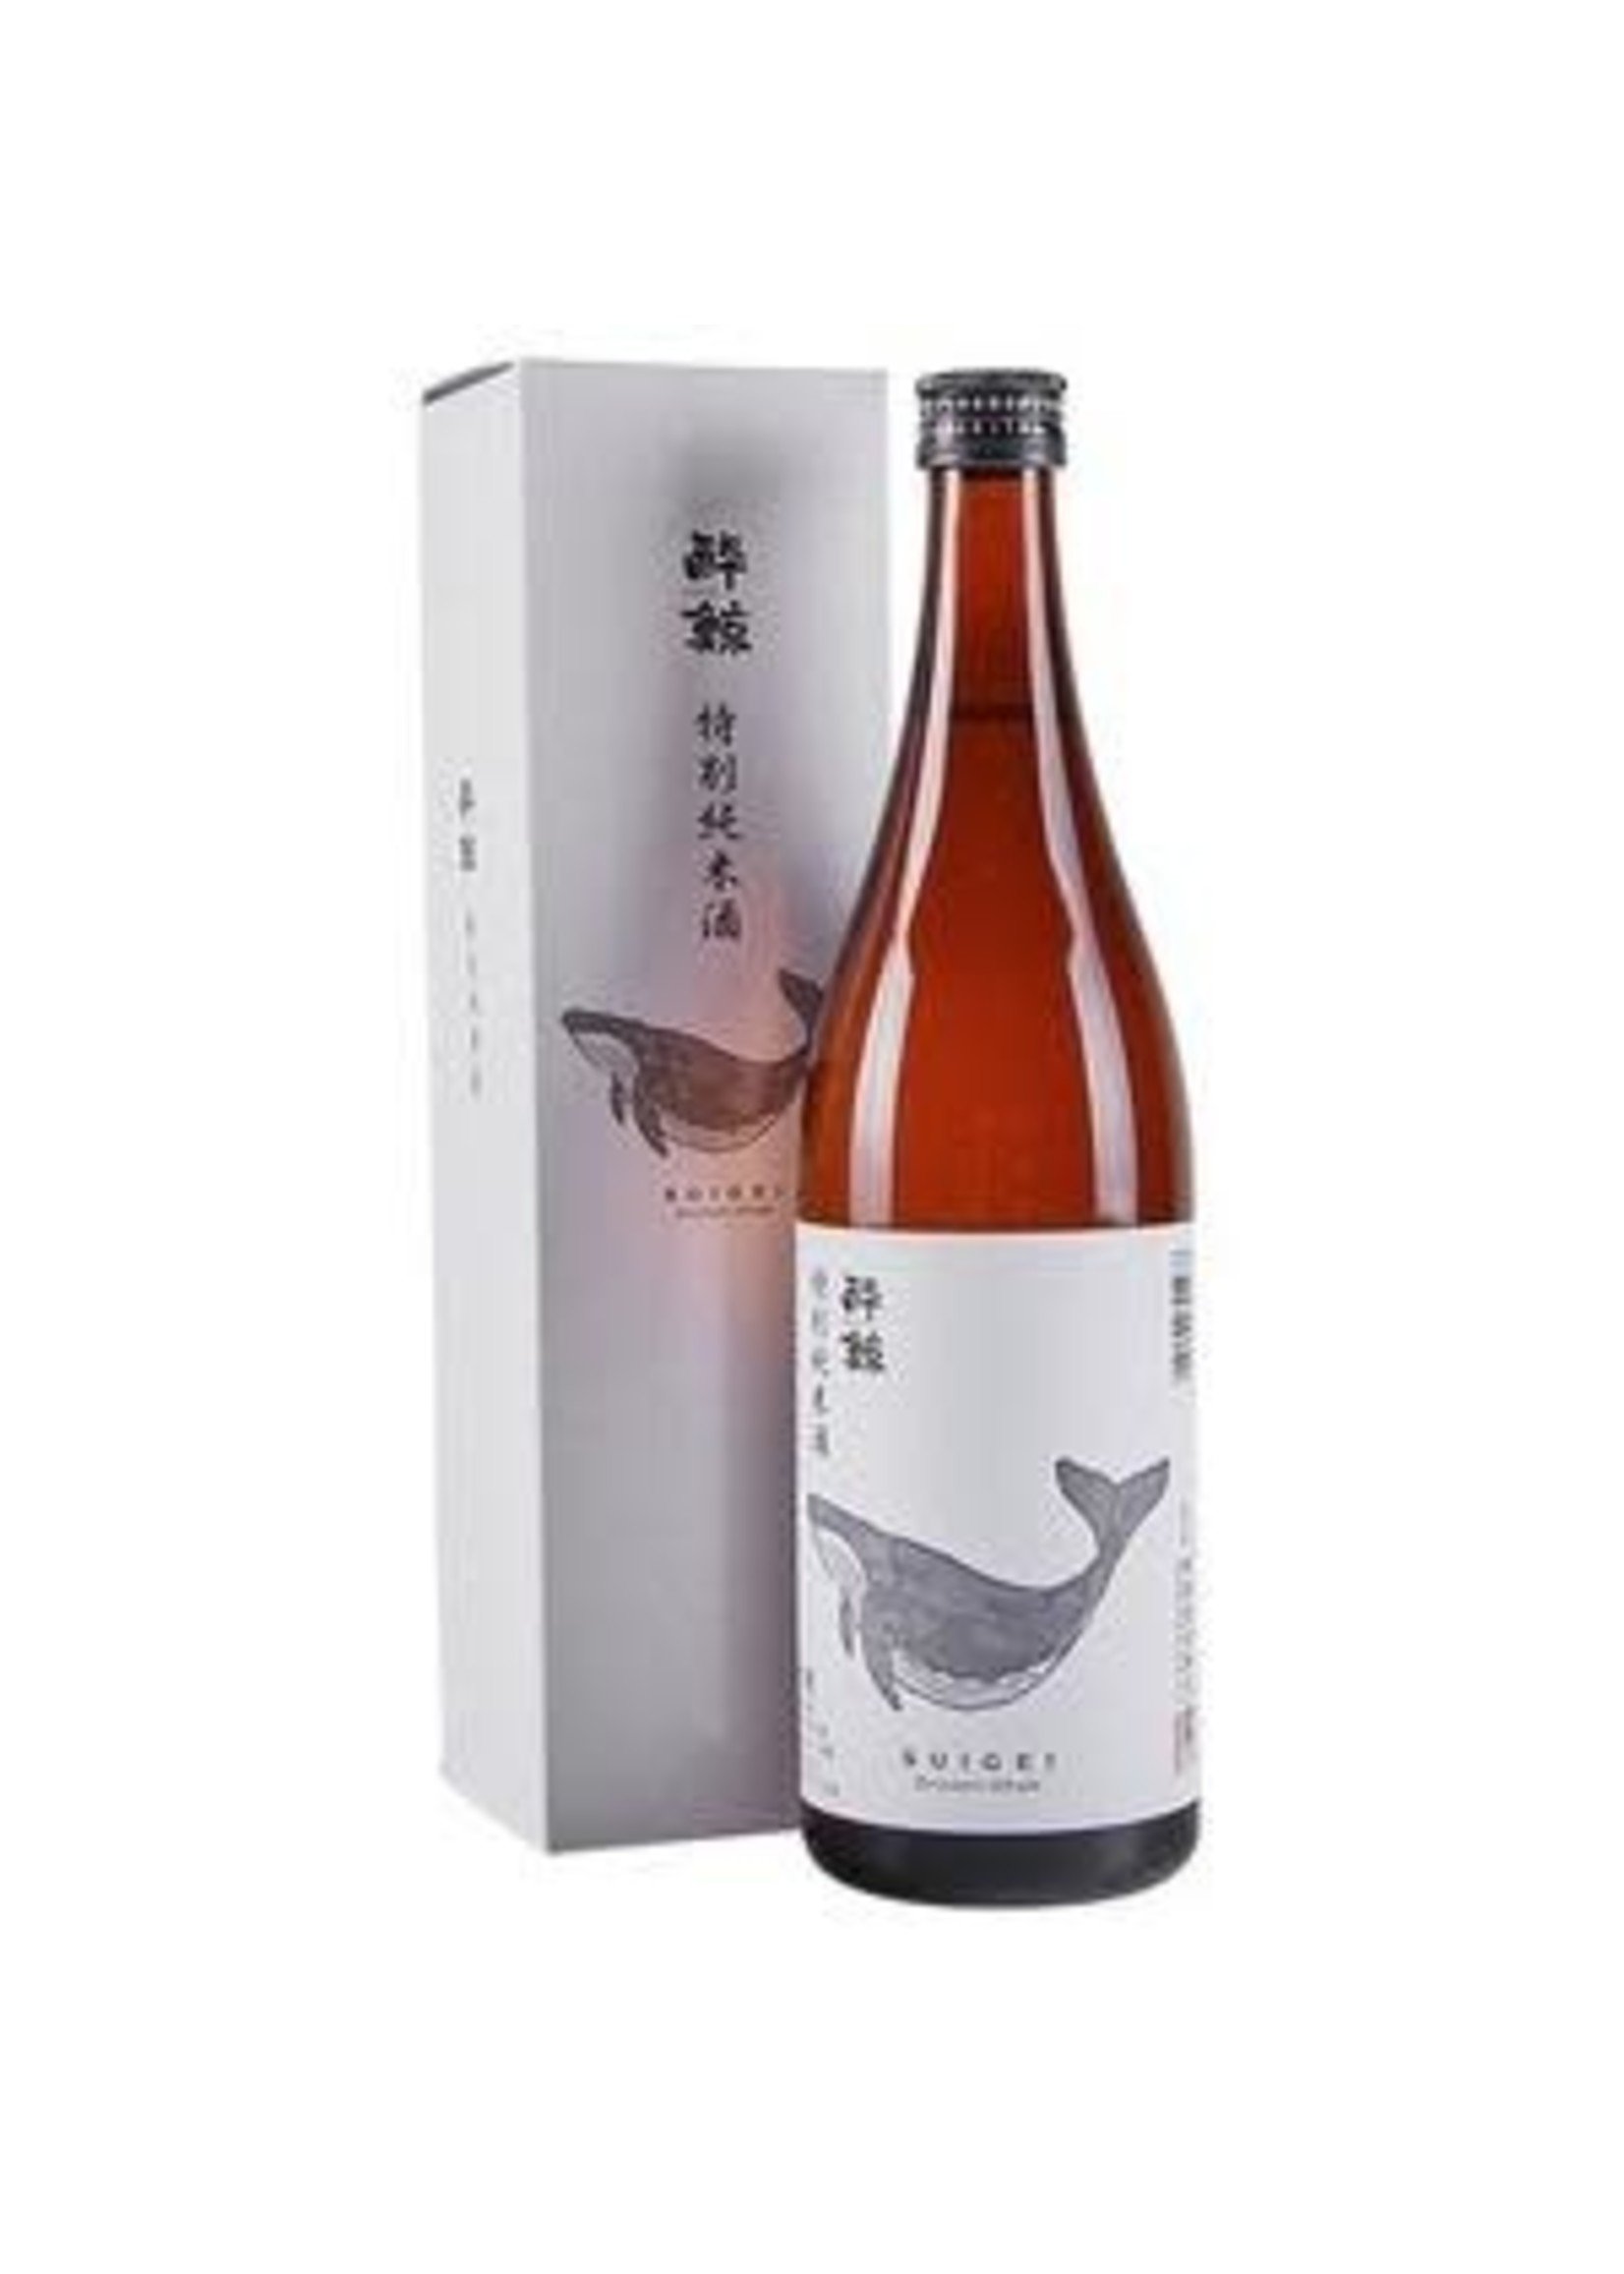 Suigei Shuzo Suigei Shuzo / Drunken Whale Tokubetsu Junmai Sake / 720mL